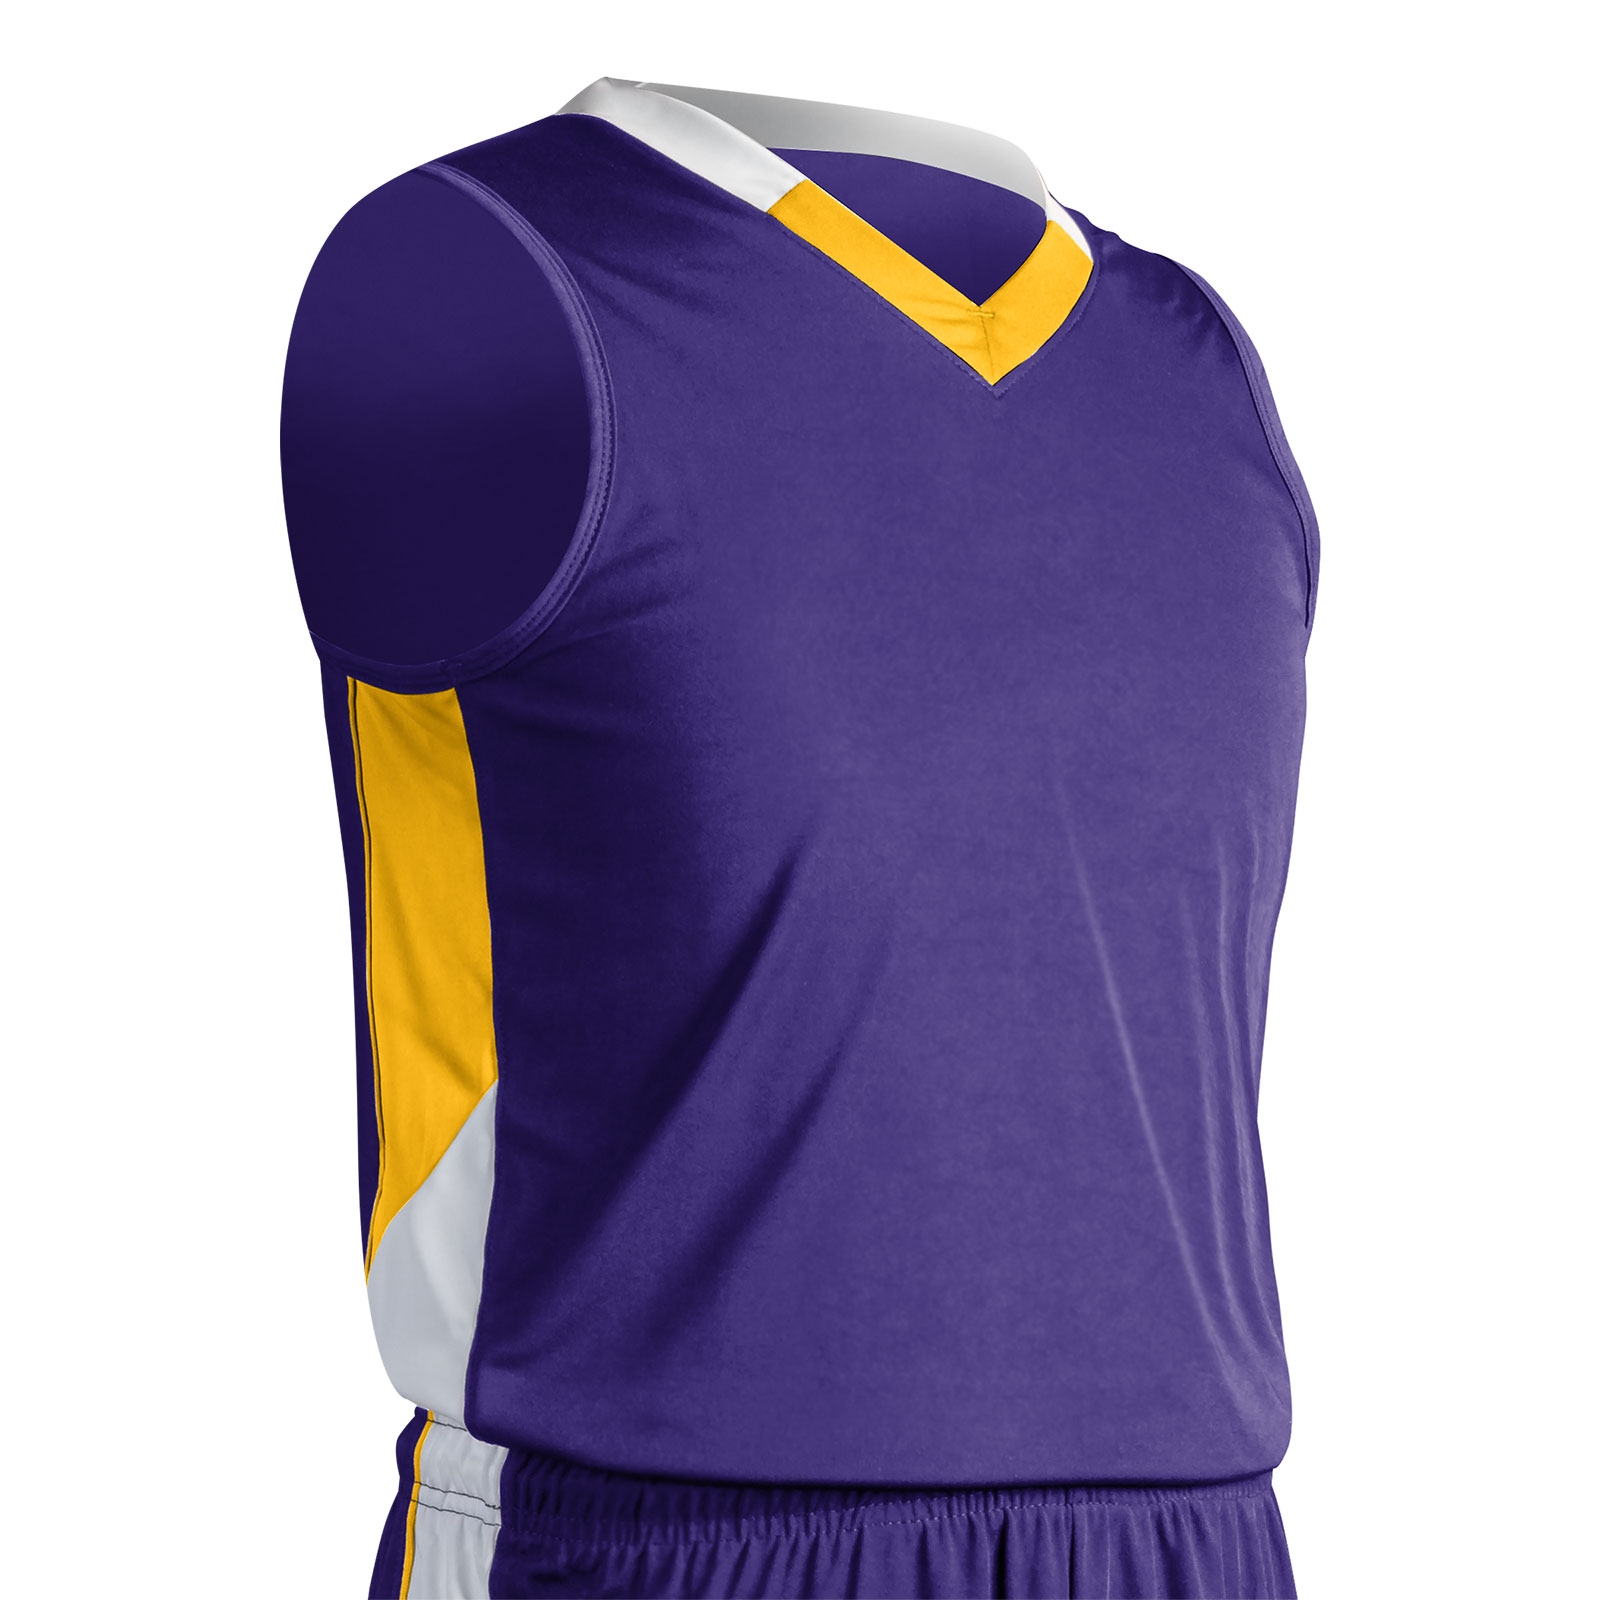 purple and white basketball jersey